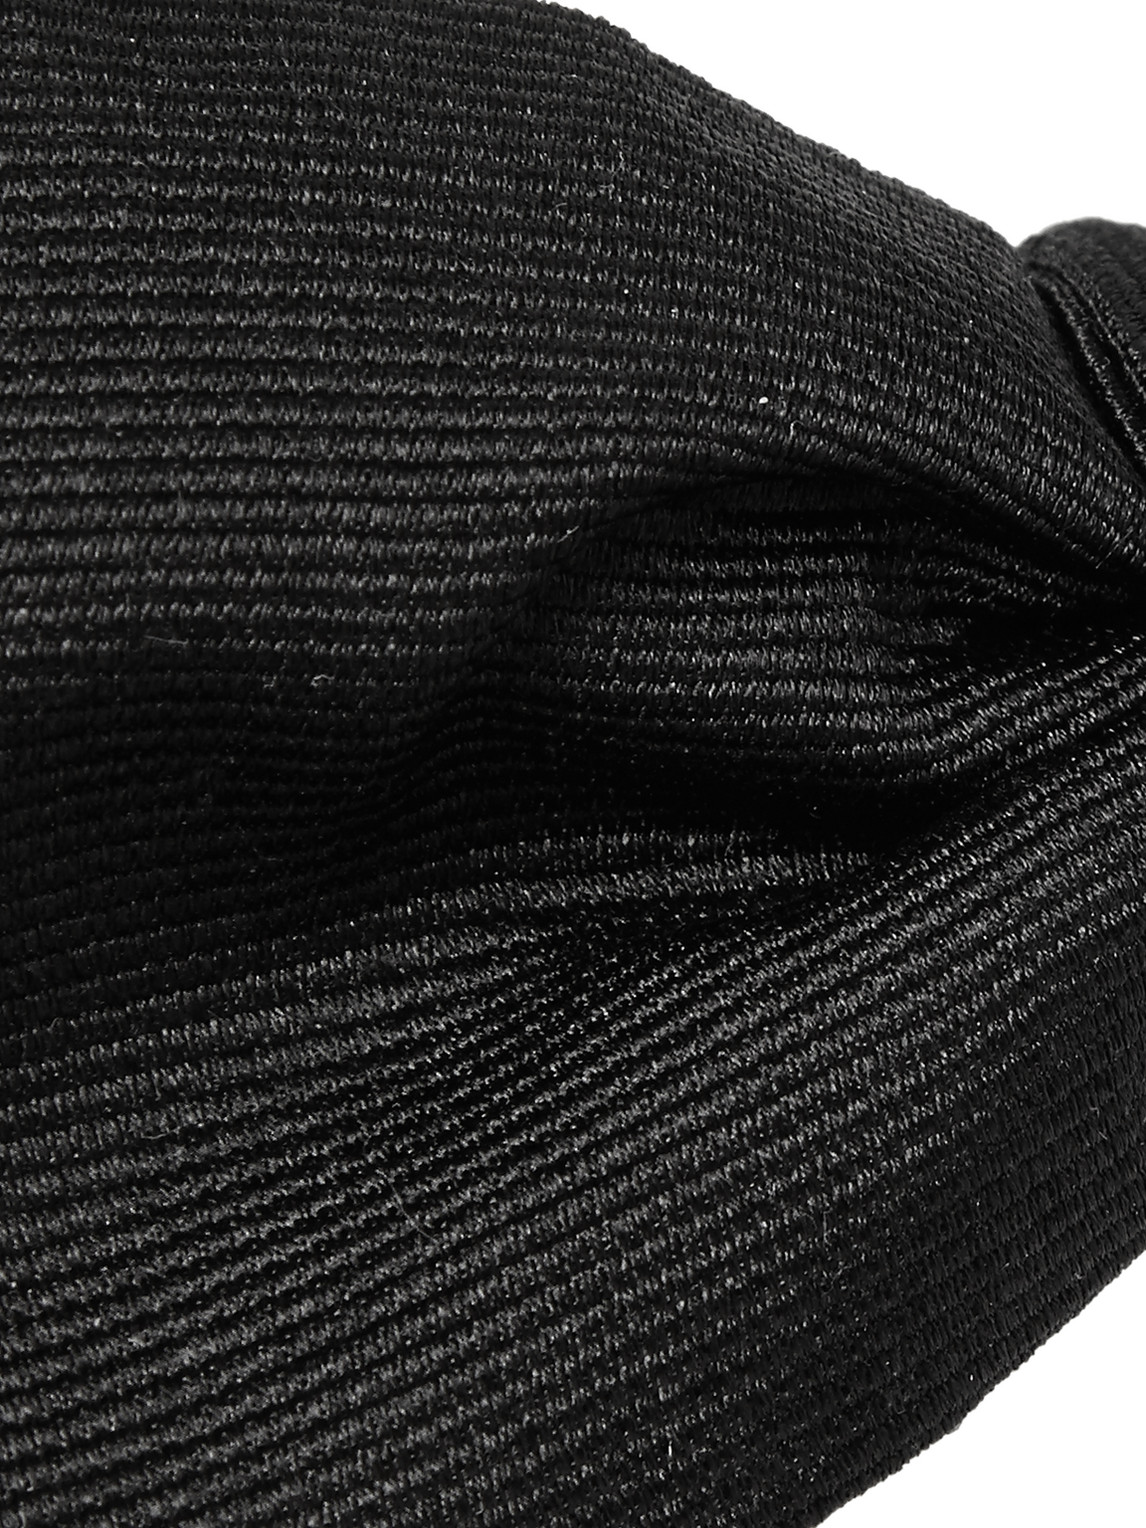 Shop Kingsman Drake's Self-tie Silk-faille Bow Tie In Black